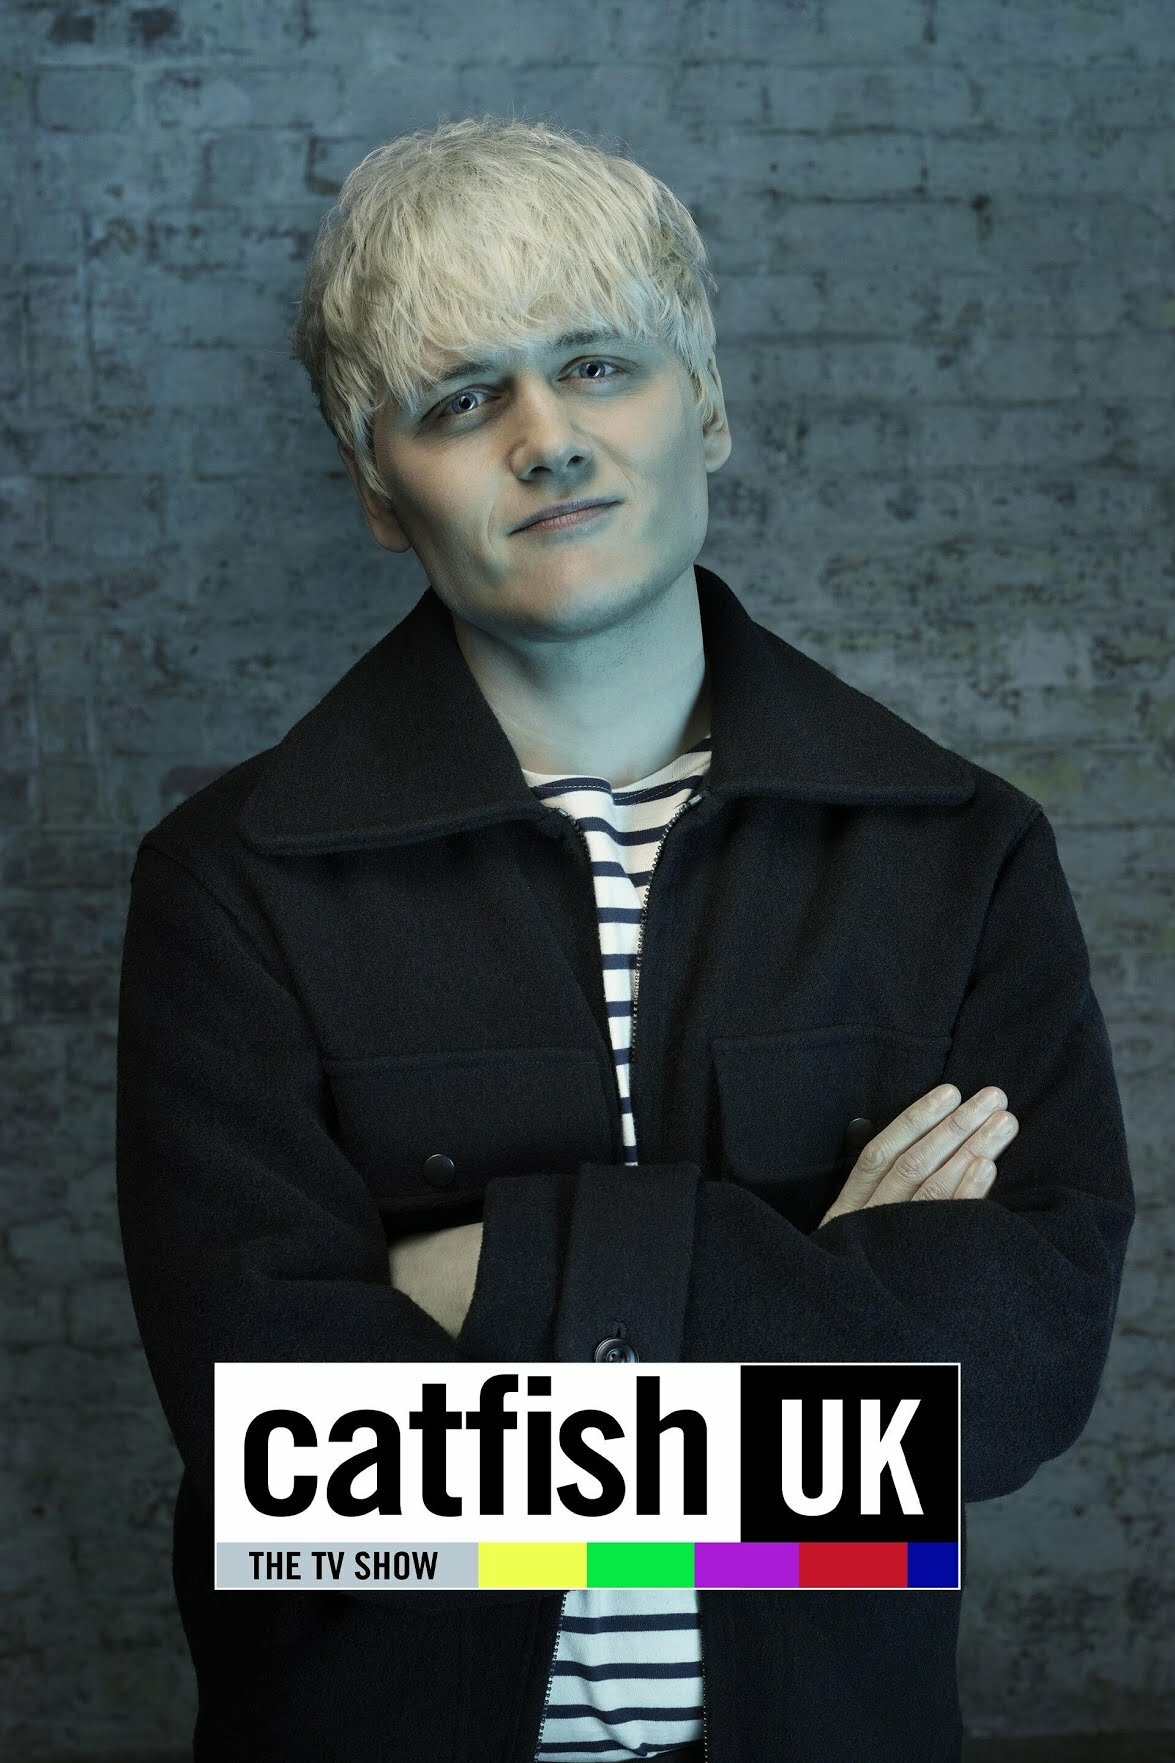 Catfish UK The TV Show ne zaman